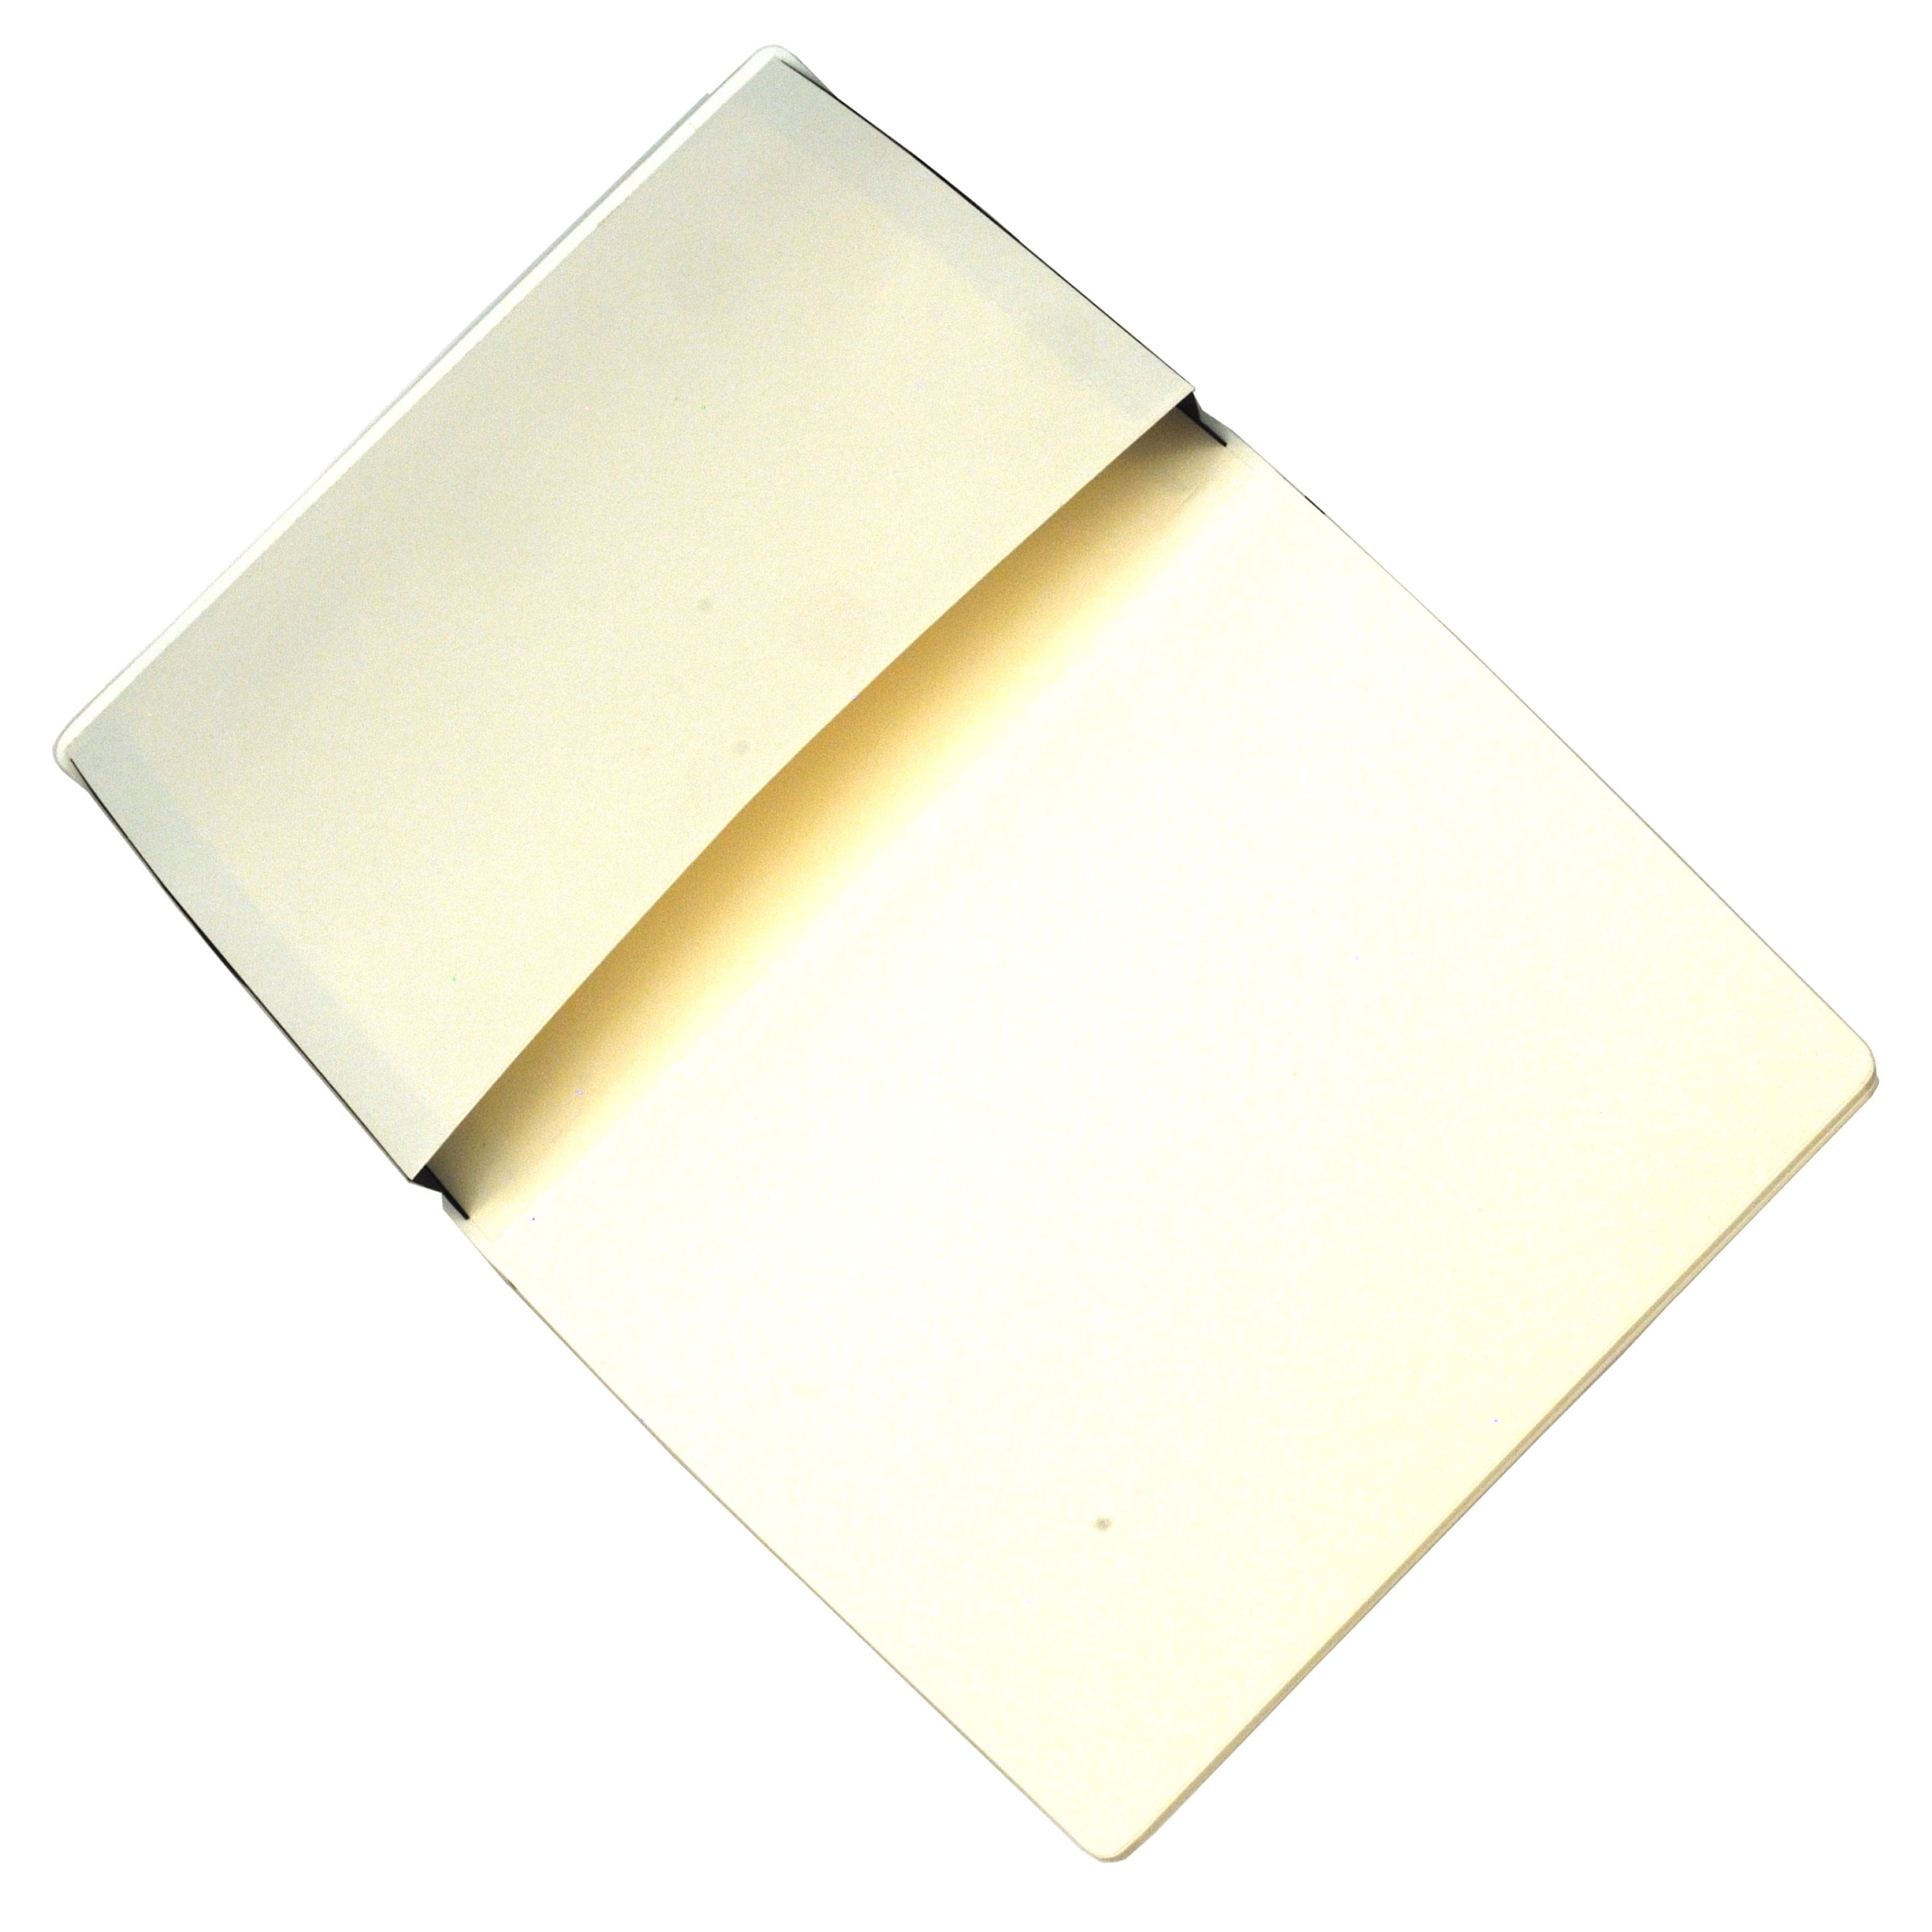 Paper24 Bullet Journal Mouse A5 Dot Grid – Paper24nl